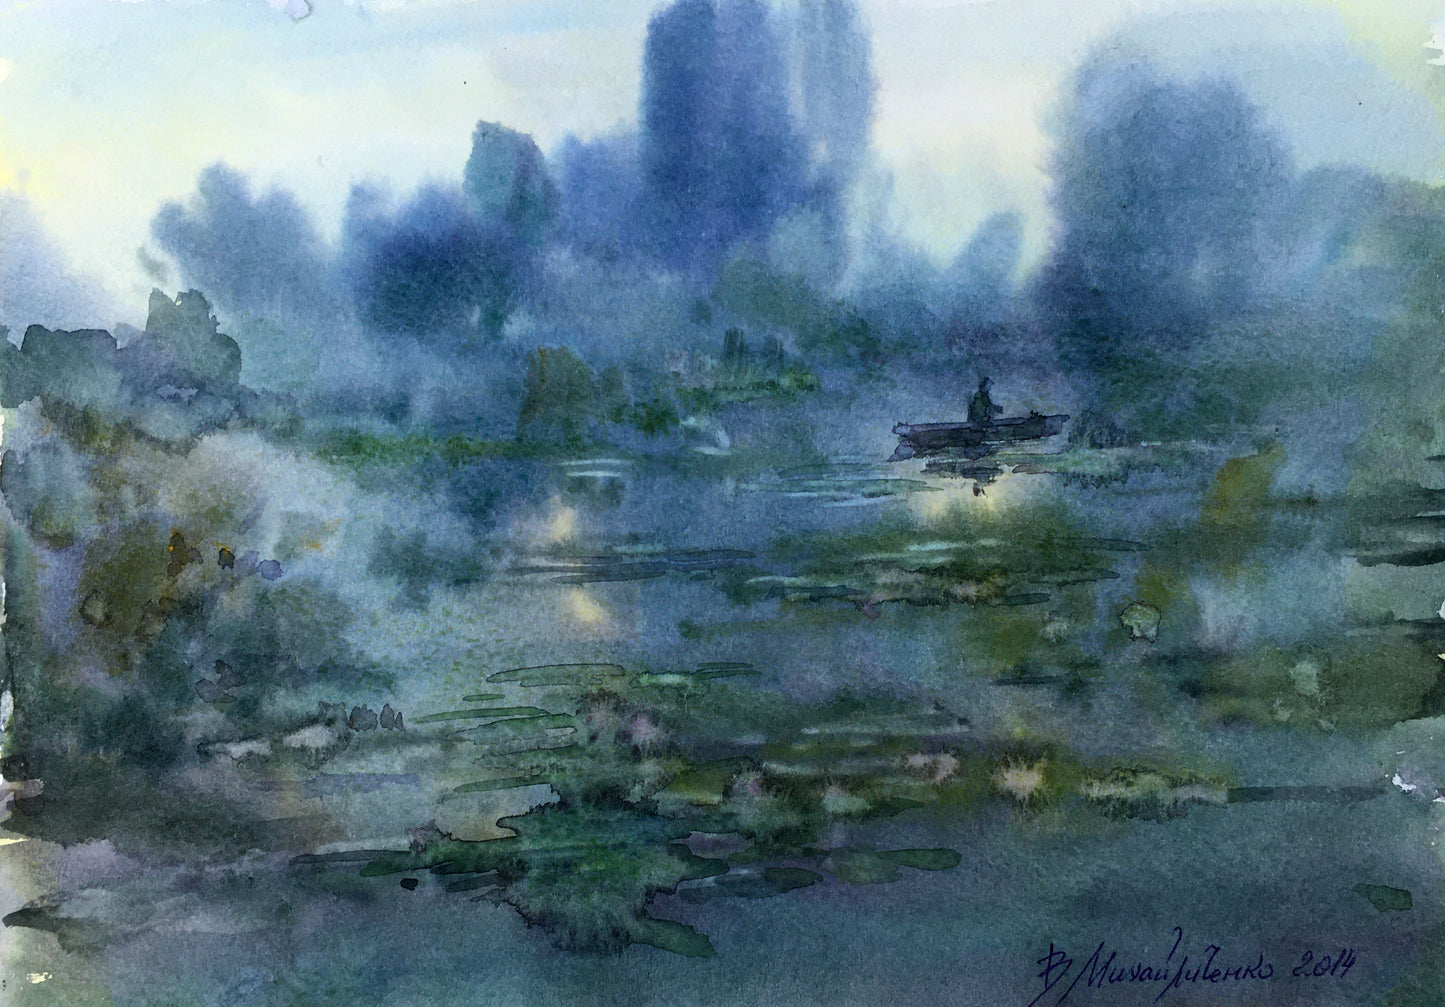 Watercolor painting Fishing at dusk Viktor Mikhailichenko